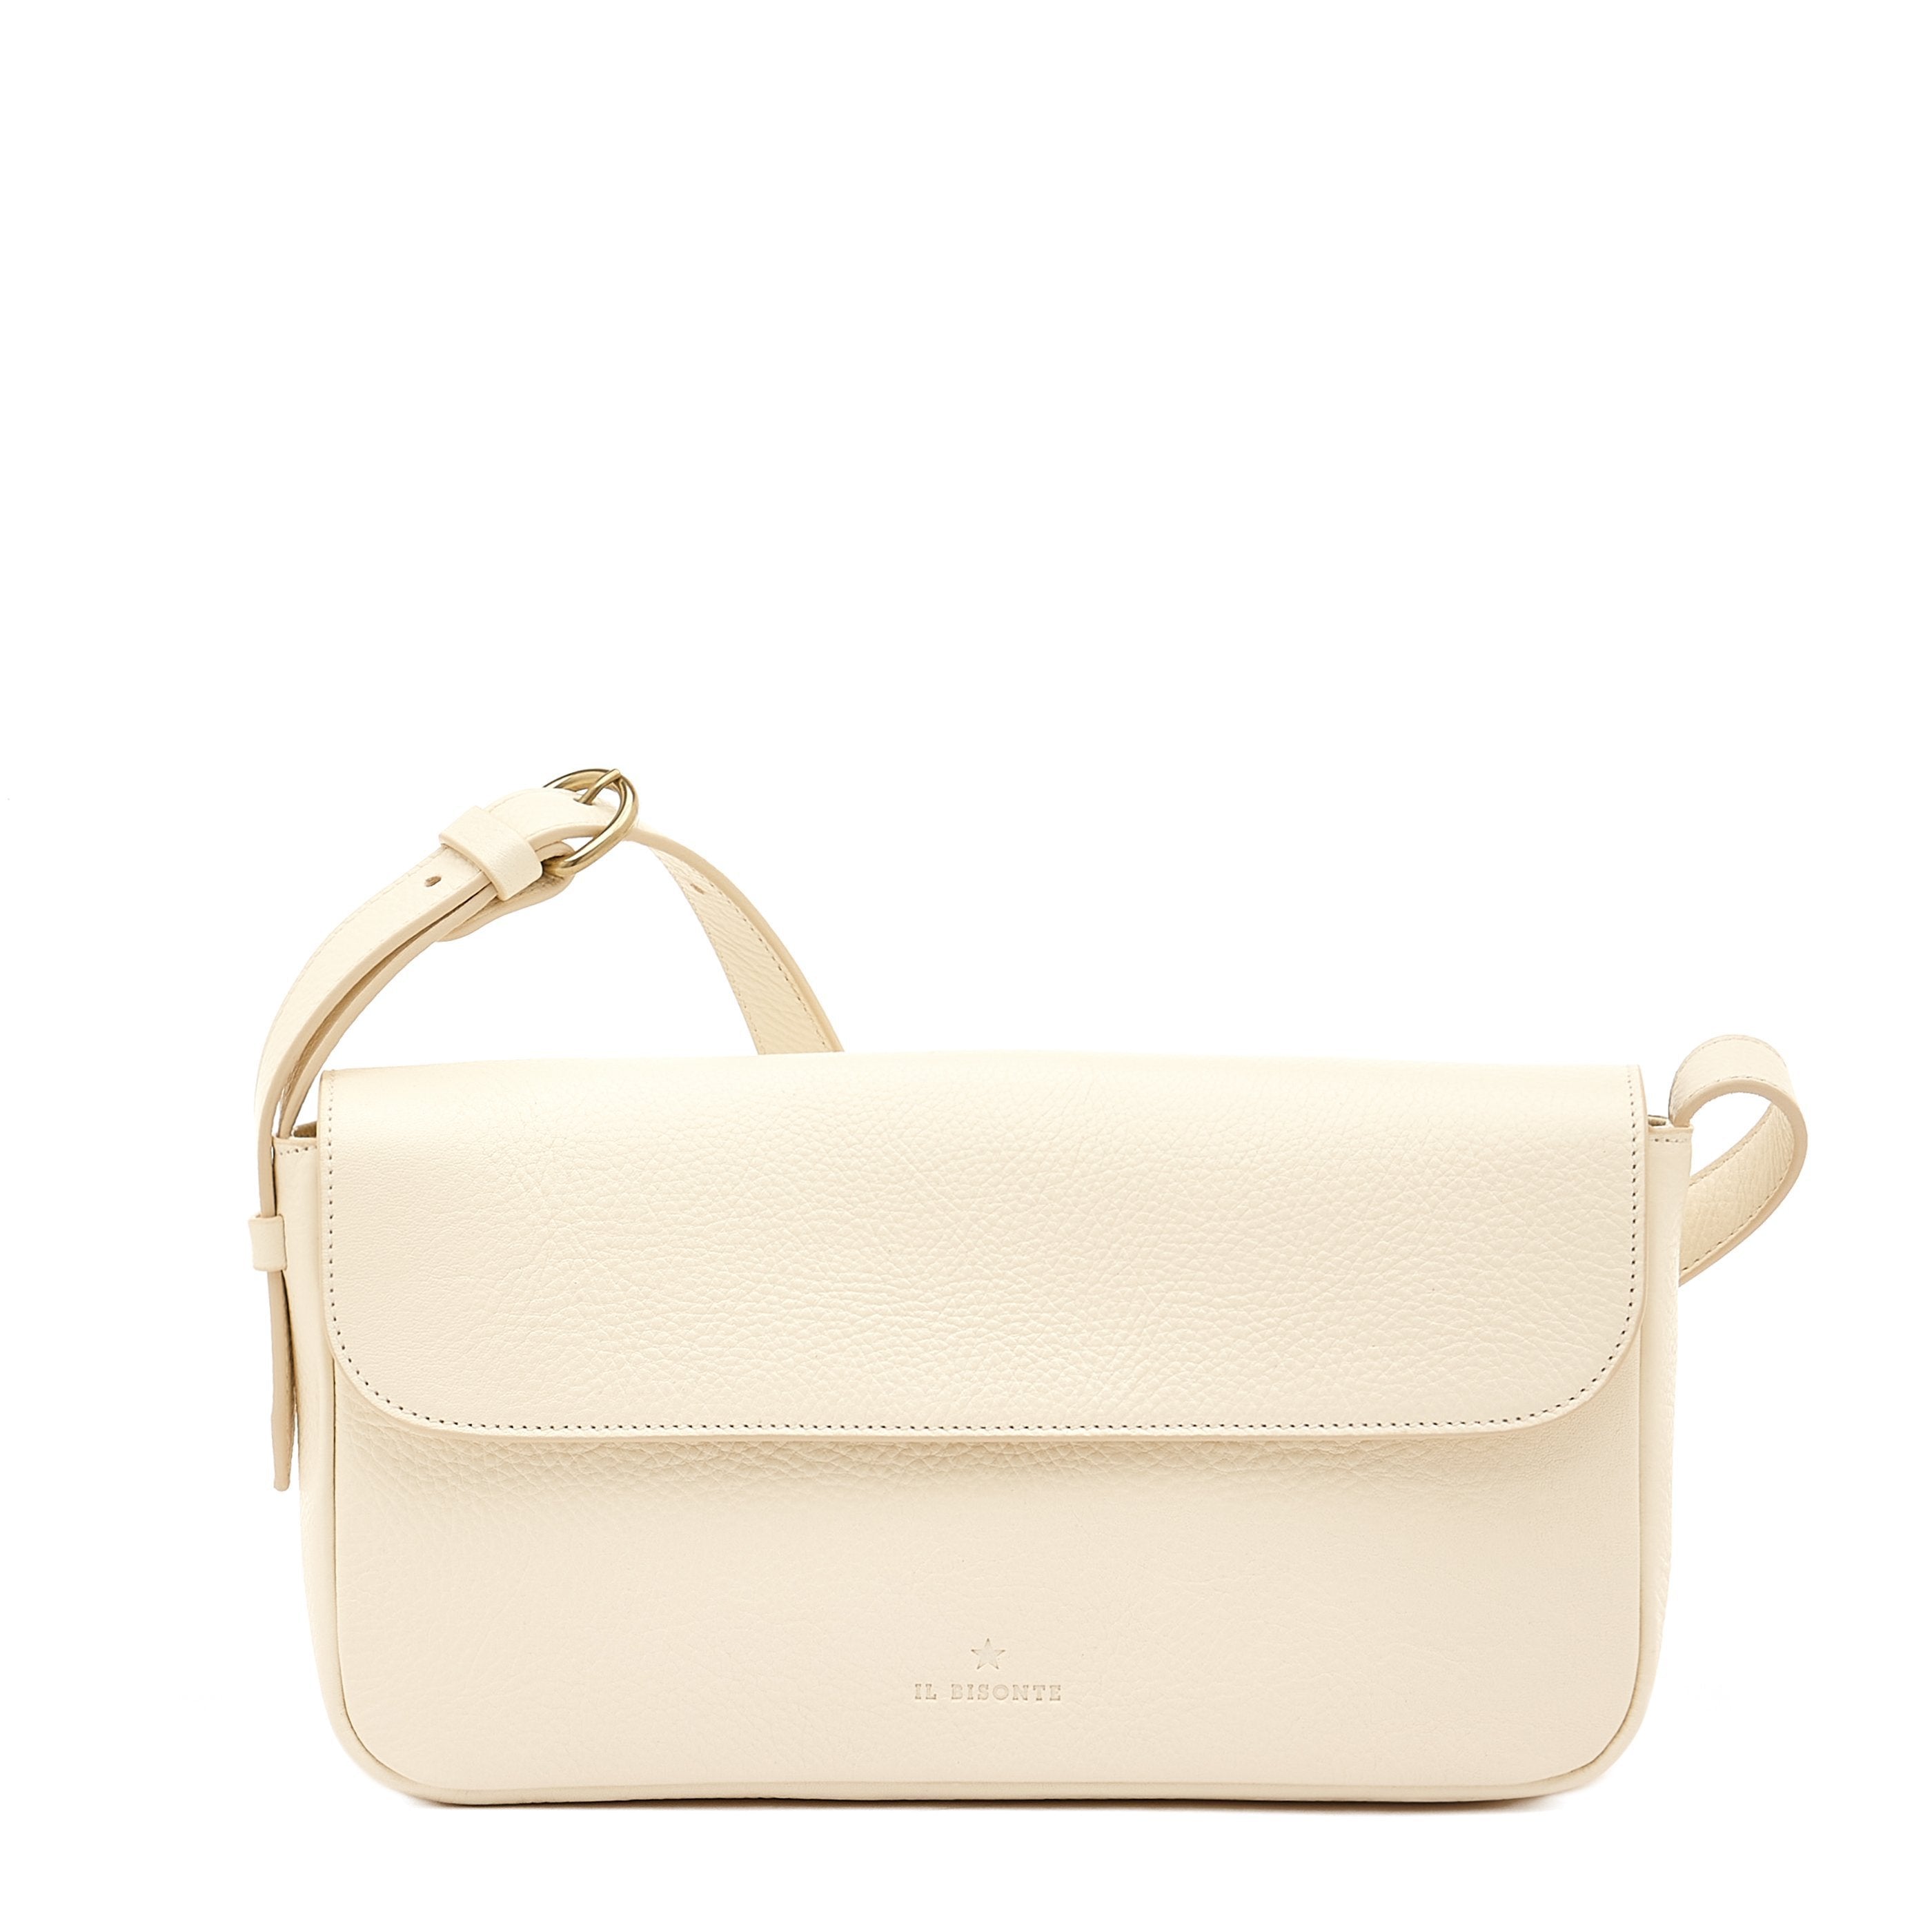 Studio   Women's shoulder bag in leather color white – Il Bisonte